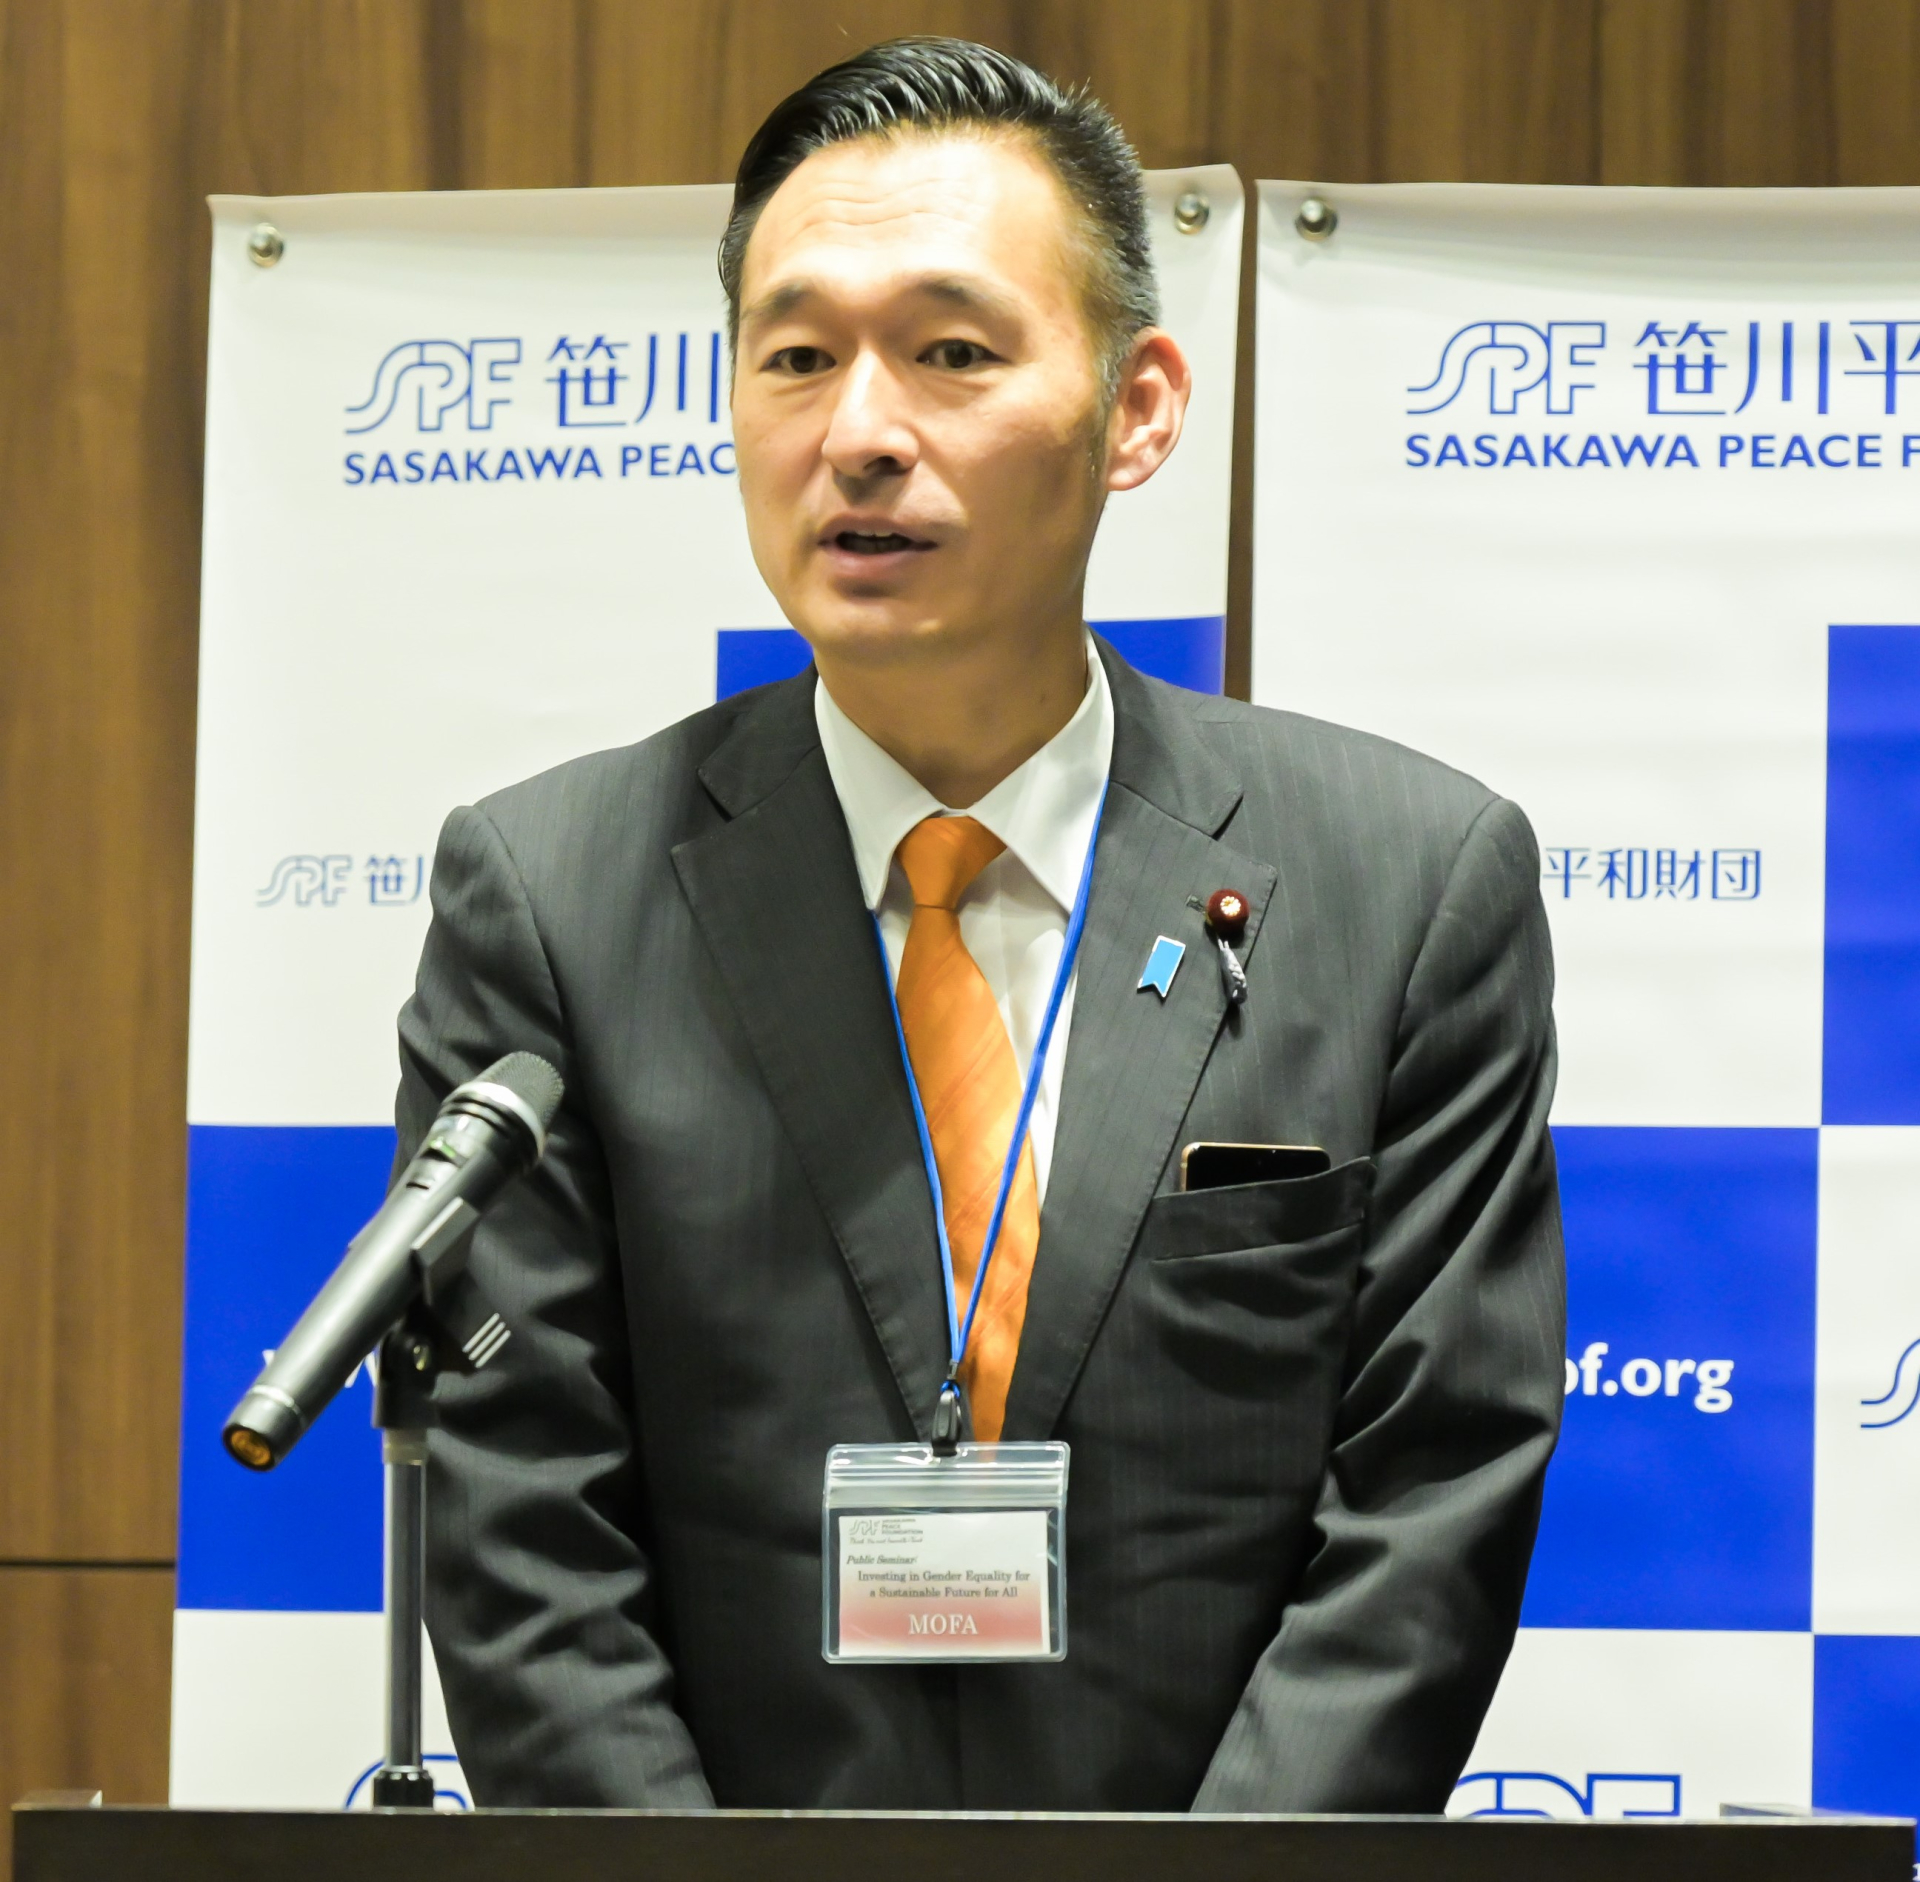 Parliamentary Vice Minister for Foreign Affairs Yoichi Fukazawa